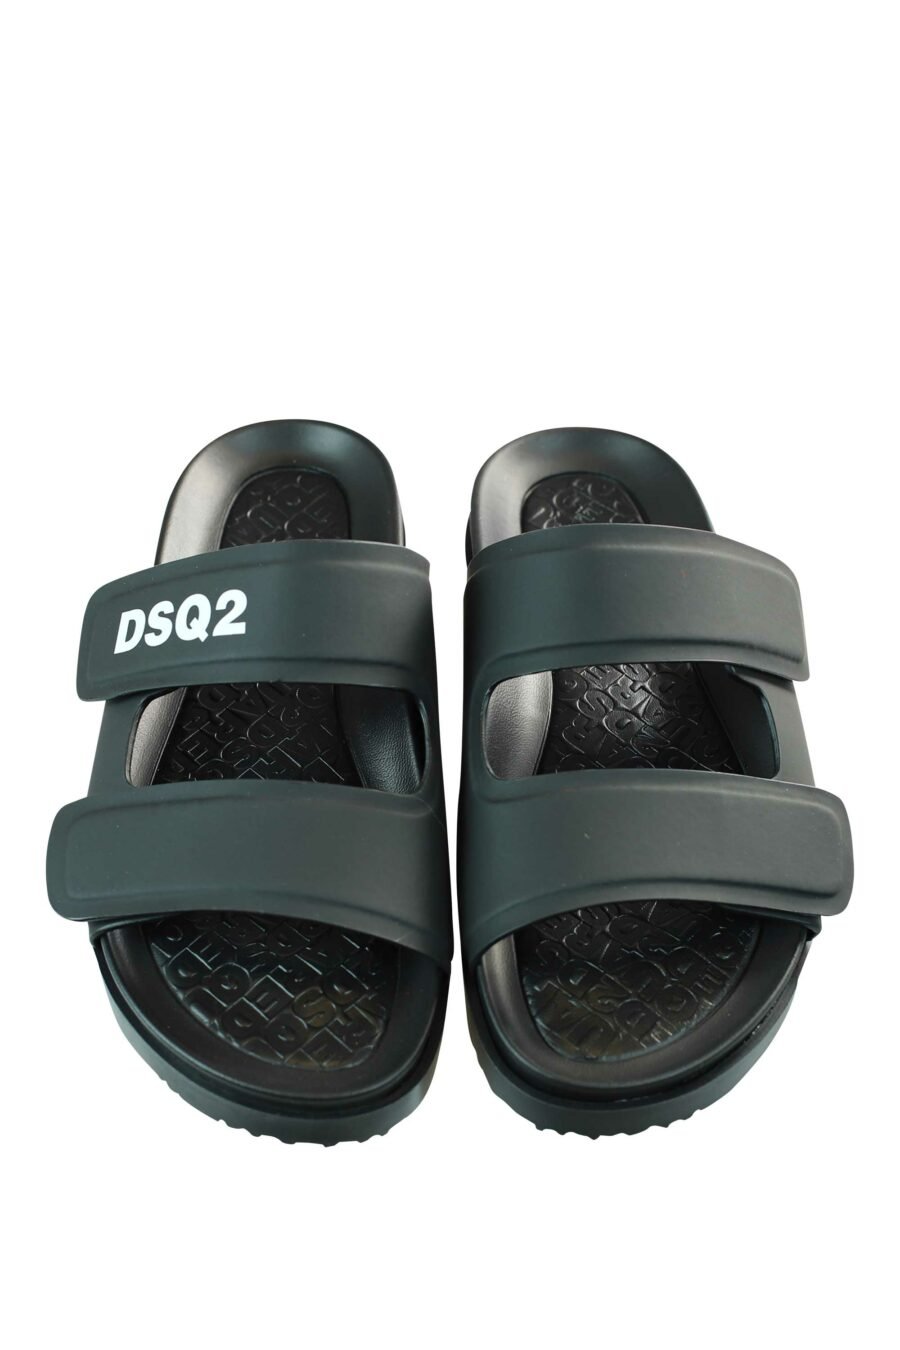 Sandalias negras con logo "dsq2" blanco y velcro - 8055777203200 4